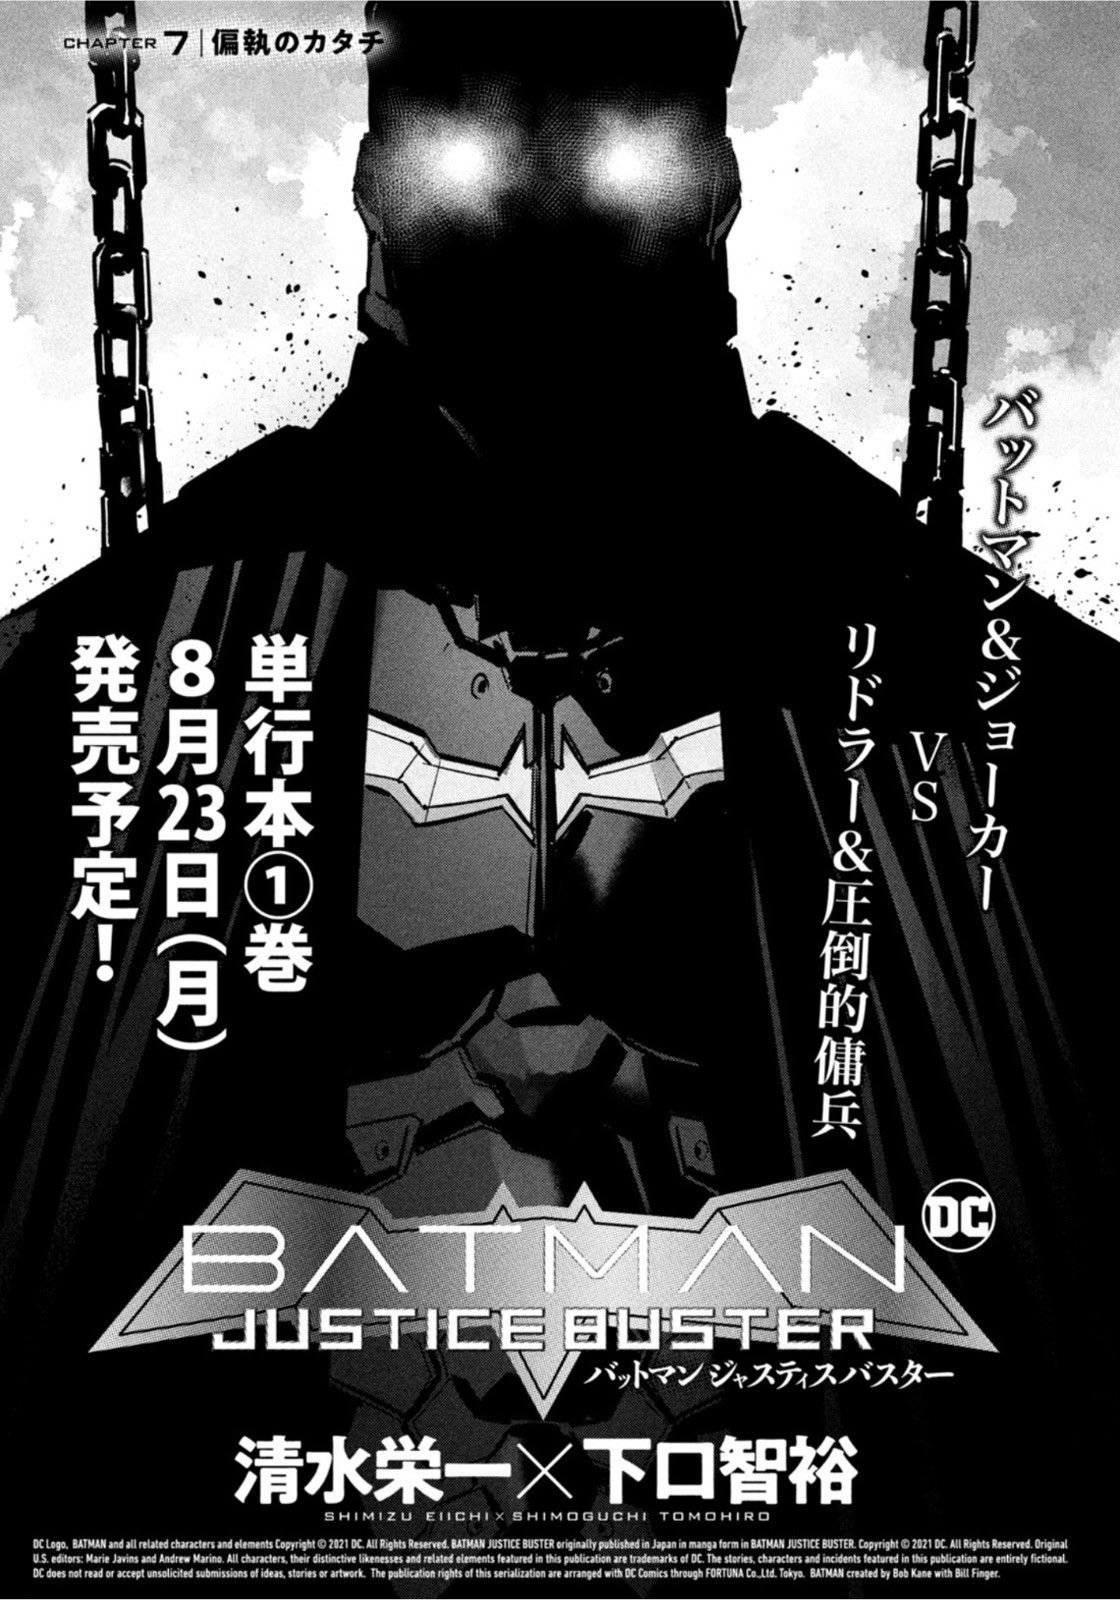 Batman Justice buster Manga image